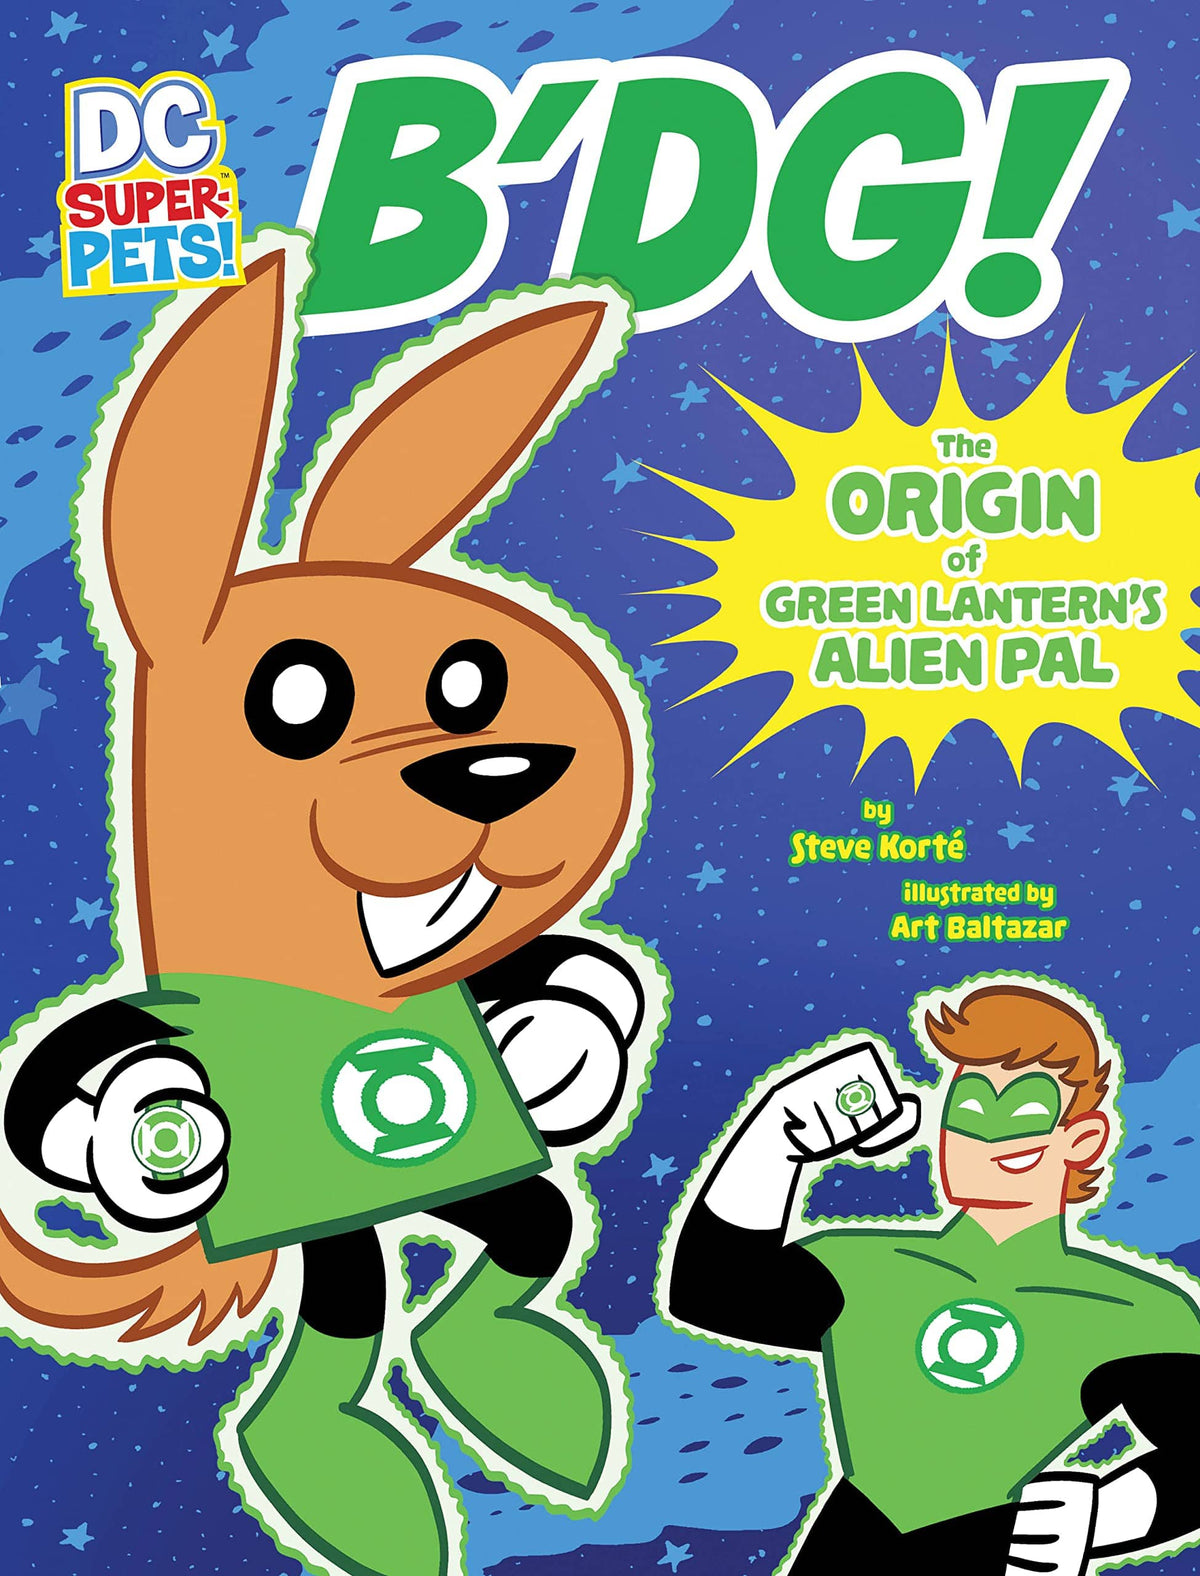 DC Super-Pets!: B'DG! - Origin of Green Lantern's Alien Pal - Third Eye